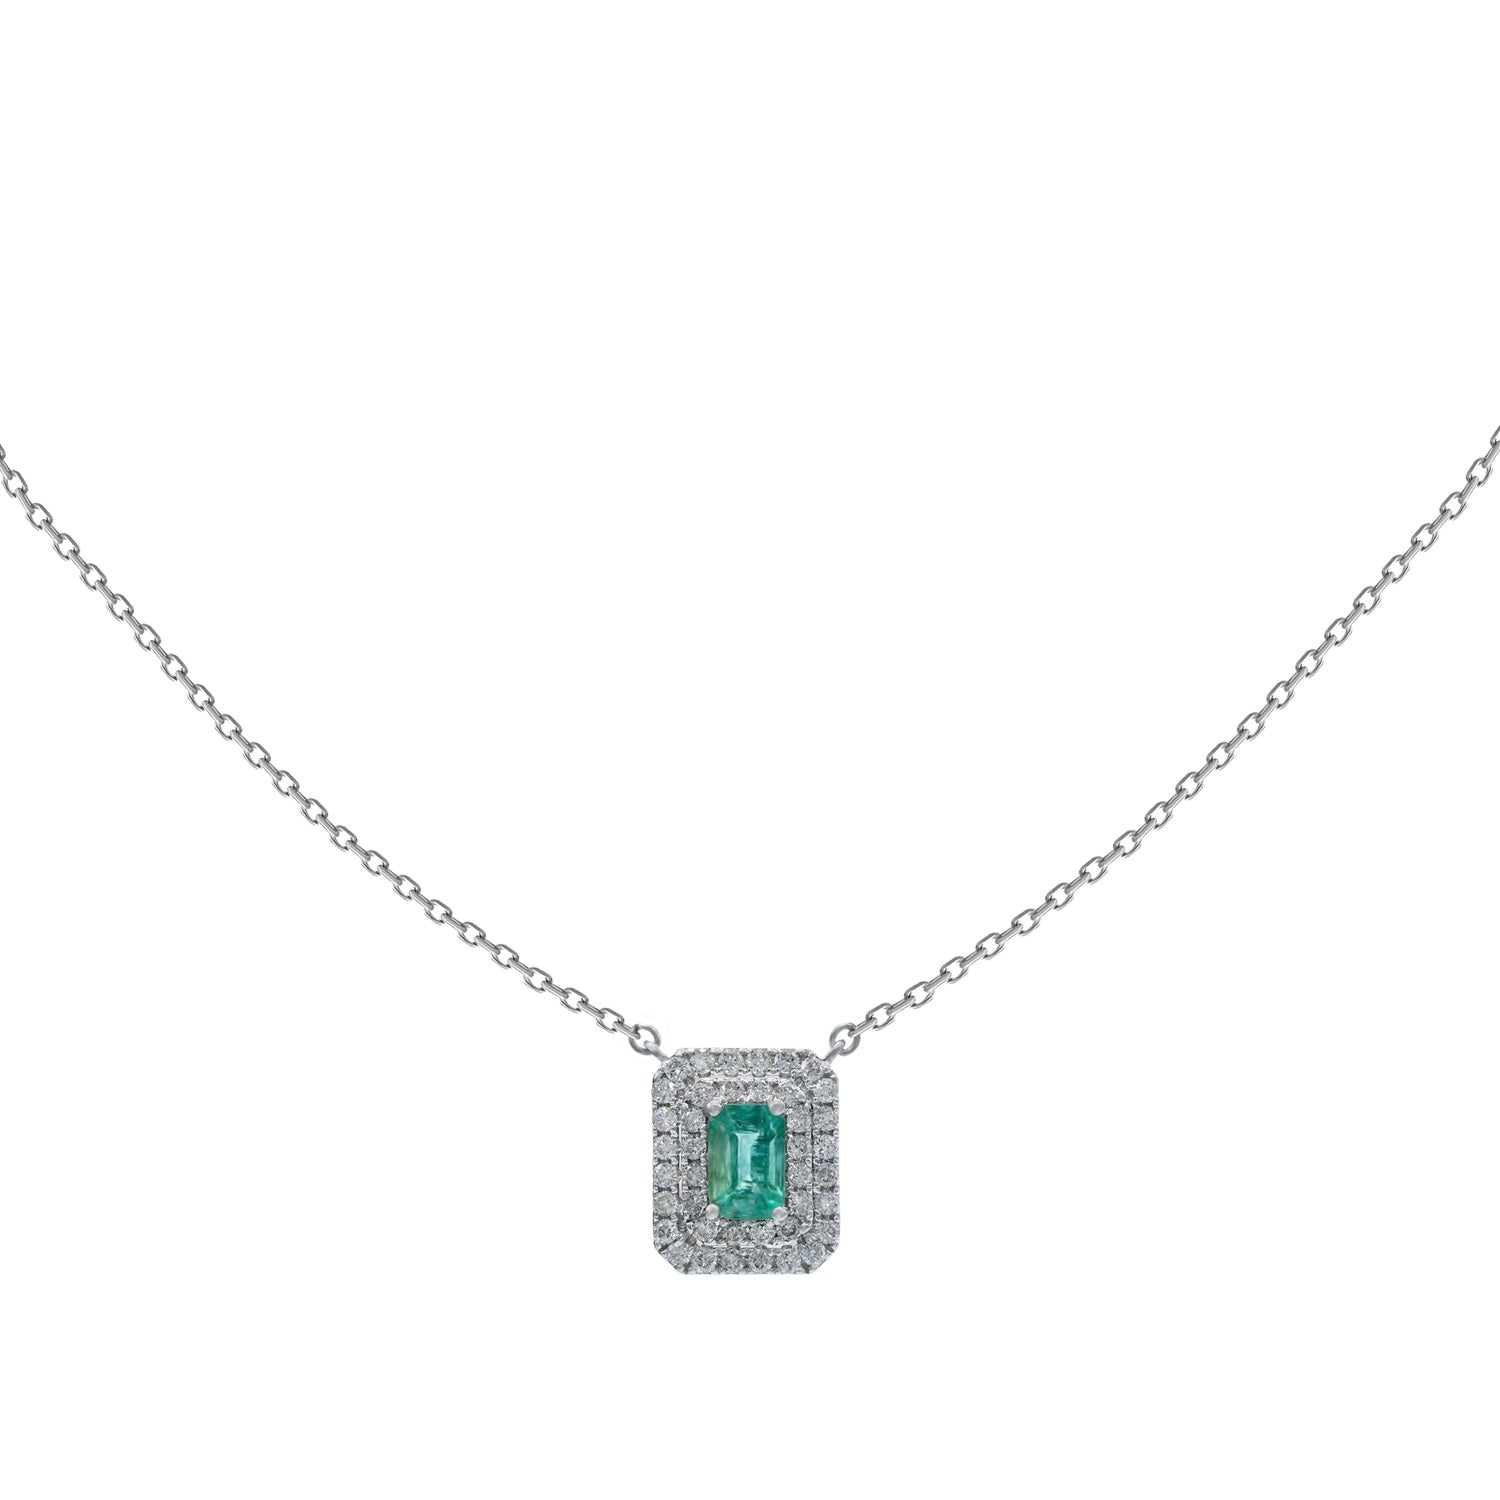 Emerald Necklace. Diamond and emerald necklace. Green stone necklace. Emerald necklace for gift. Rare emerald stone necklace. Diamond jewellery. Anatol jewellery. Κοσμήματα Ανατόλ. Χρυσά κοσμήματα. Κολιέ με σμαράγδι. Κολιέ με σμαράγδι και διαμάντια. Κοσμήματα Κηφισιά.